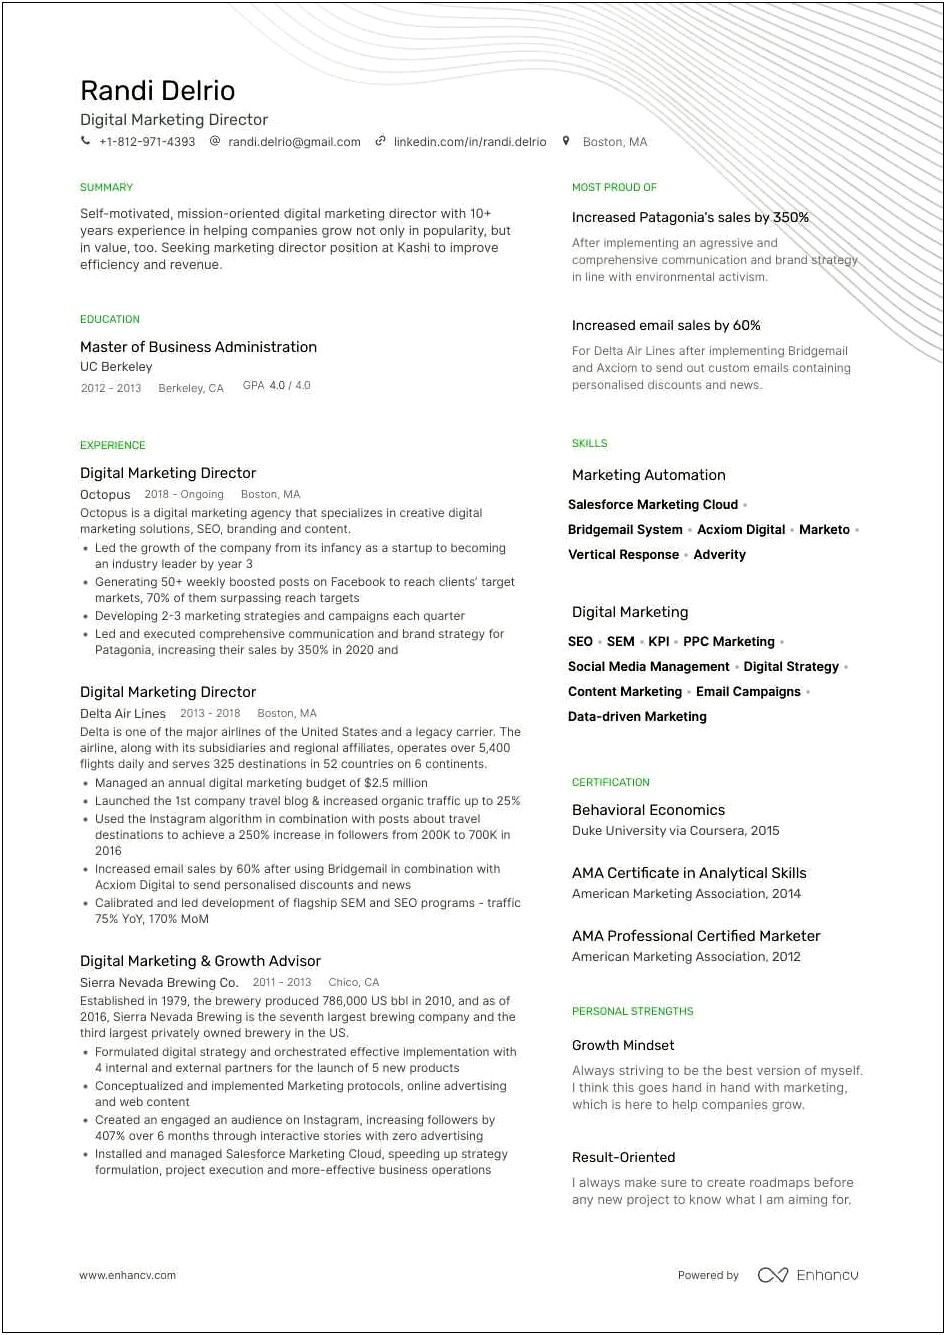 Sample Resume For Digital Media